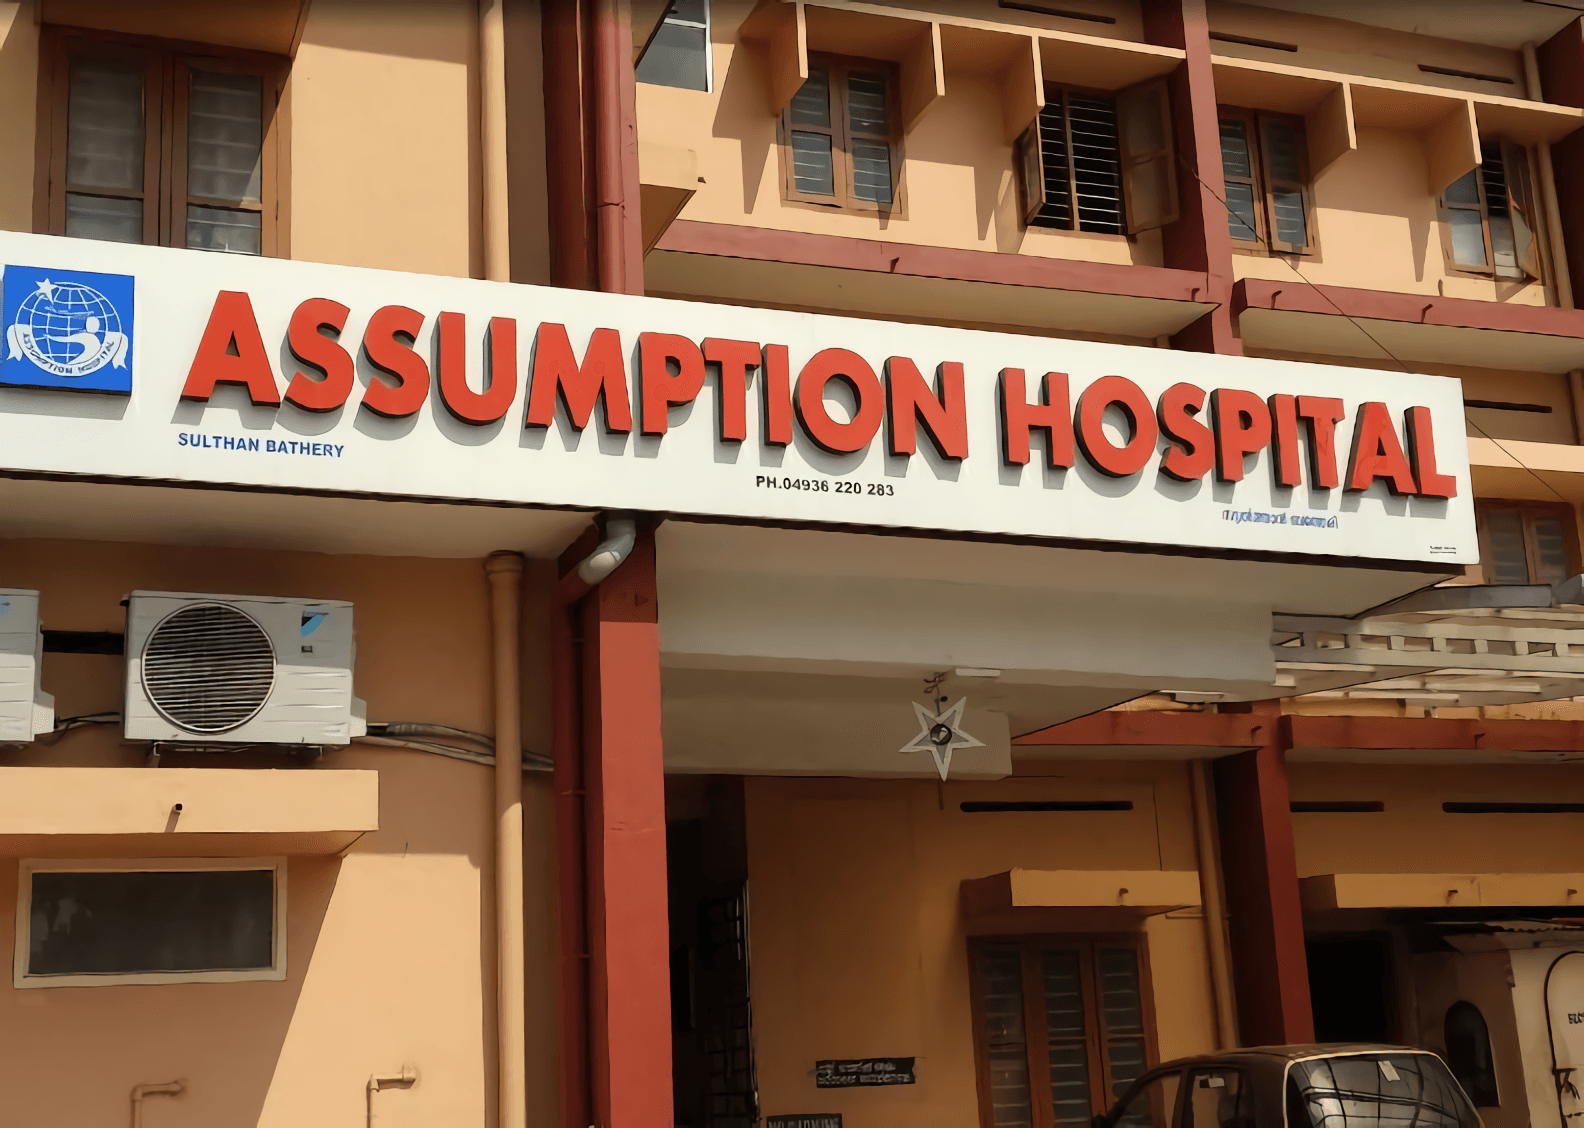 Assumption Hospital